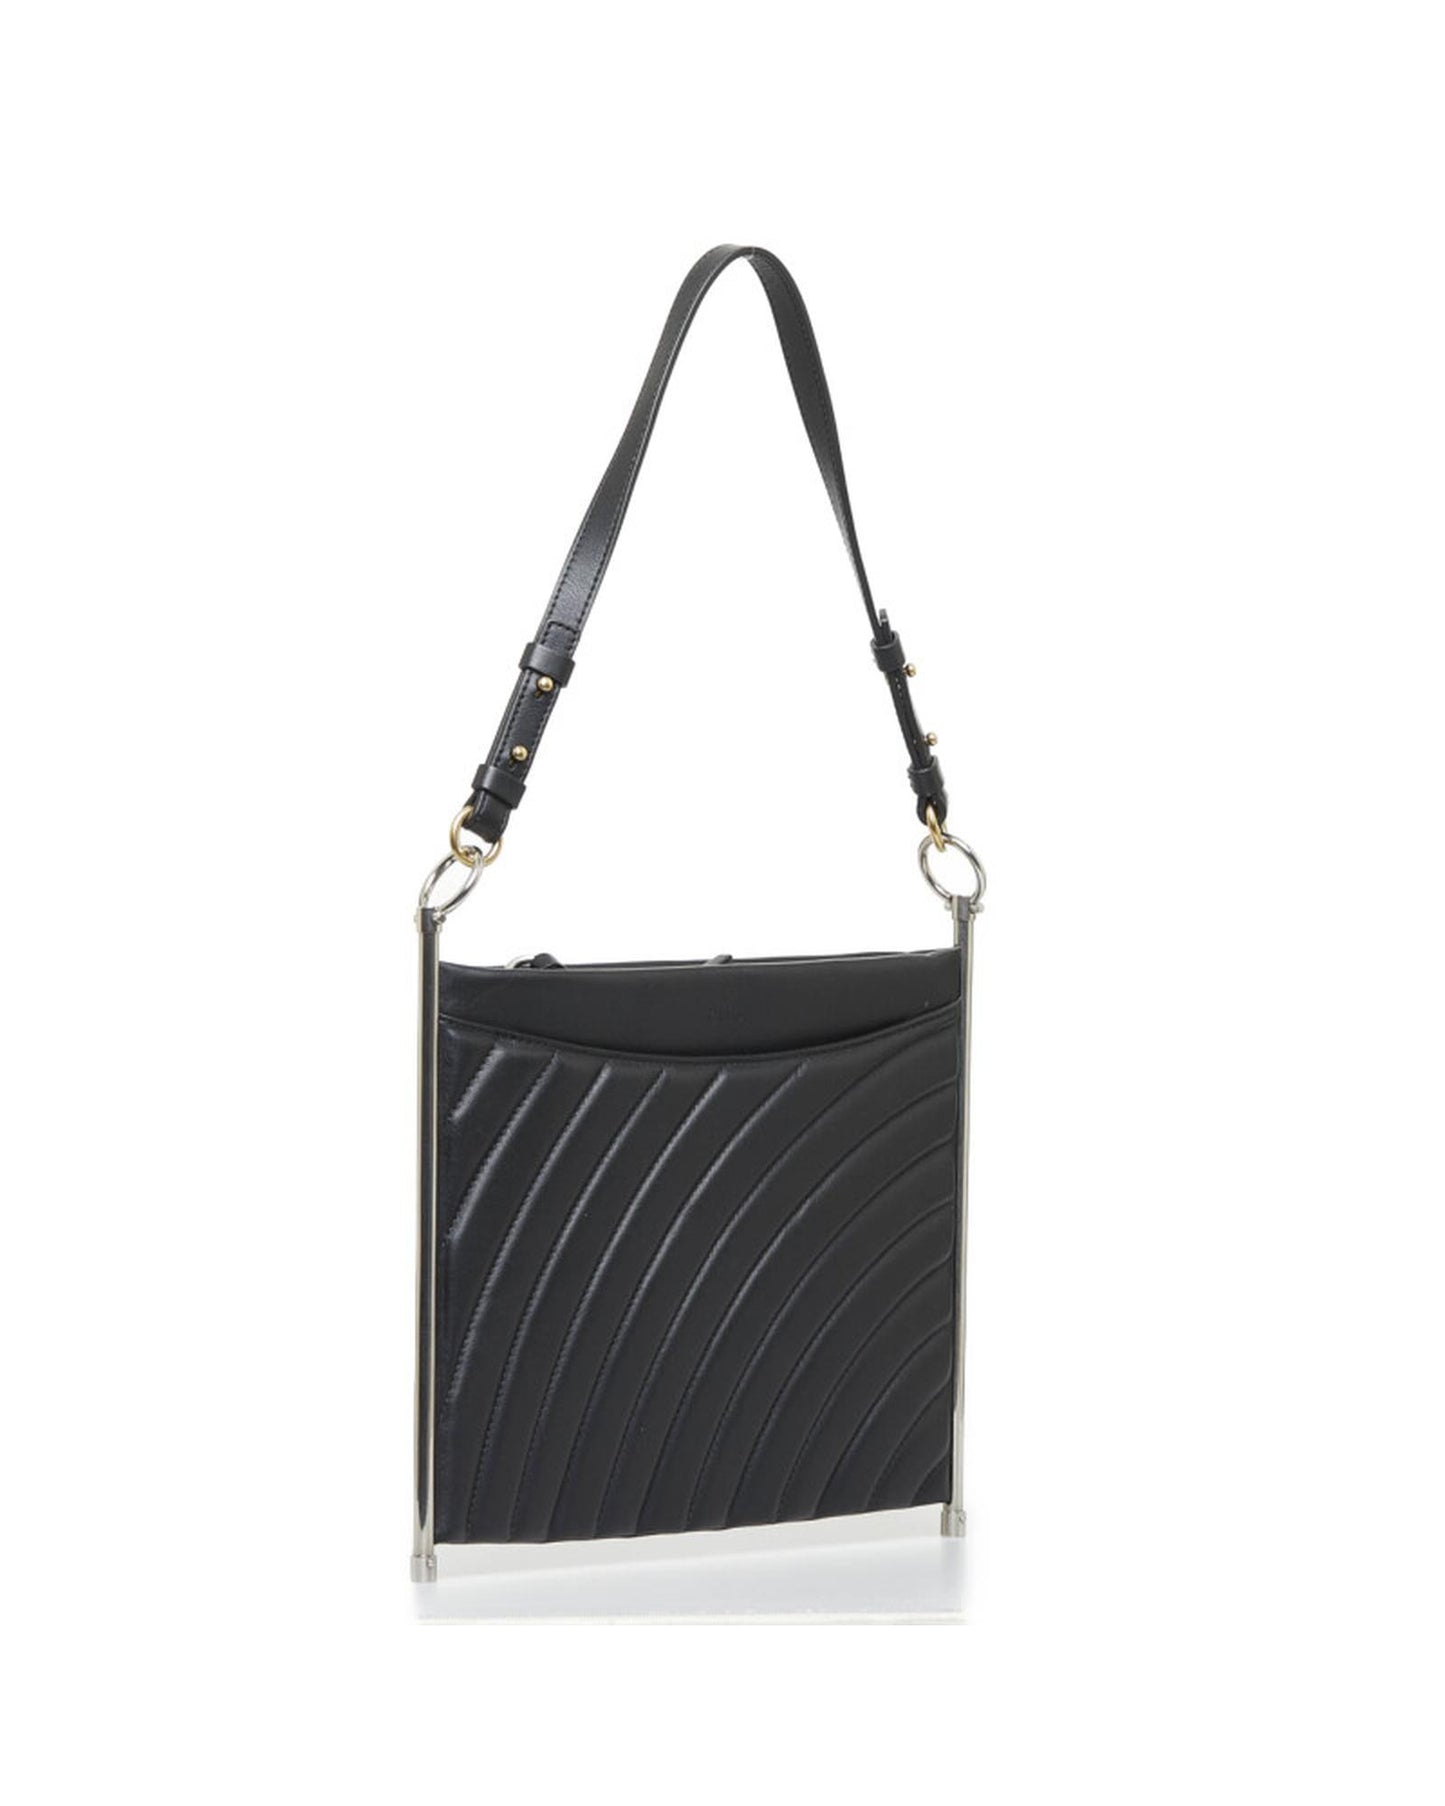 Chloe Women's Quilted Leather Shoulder Bag in Black